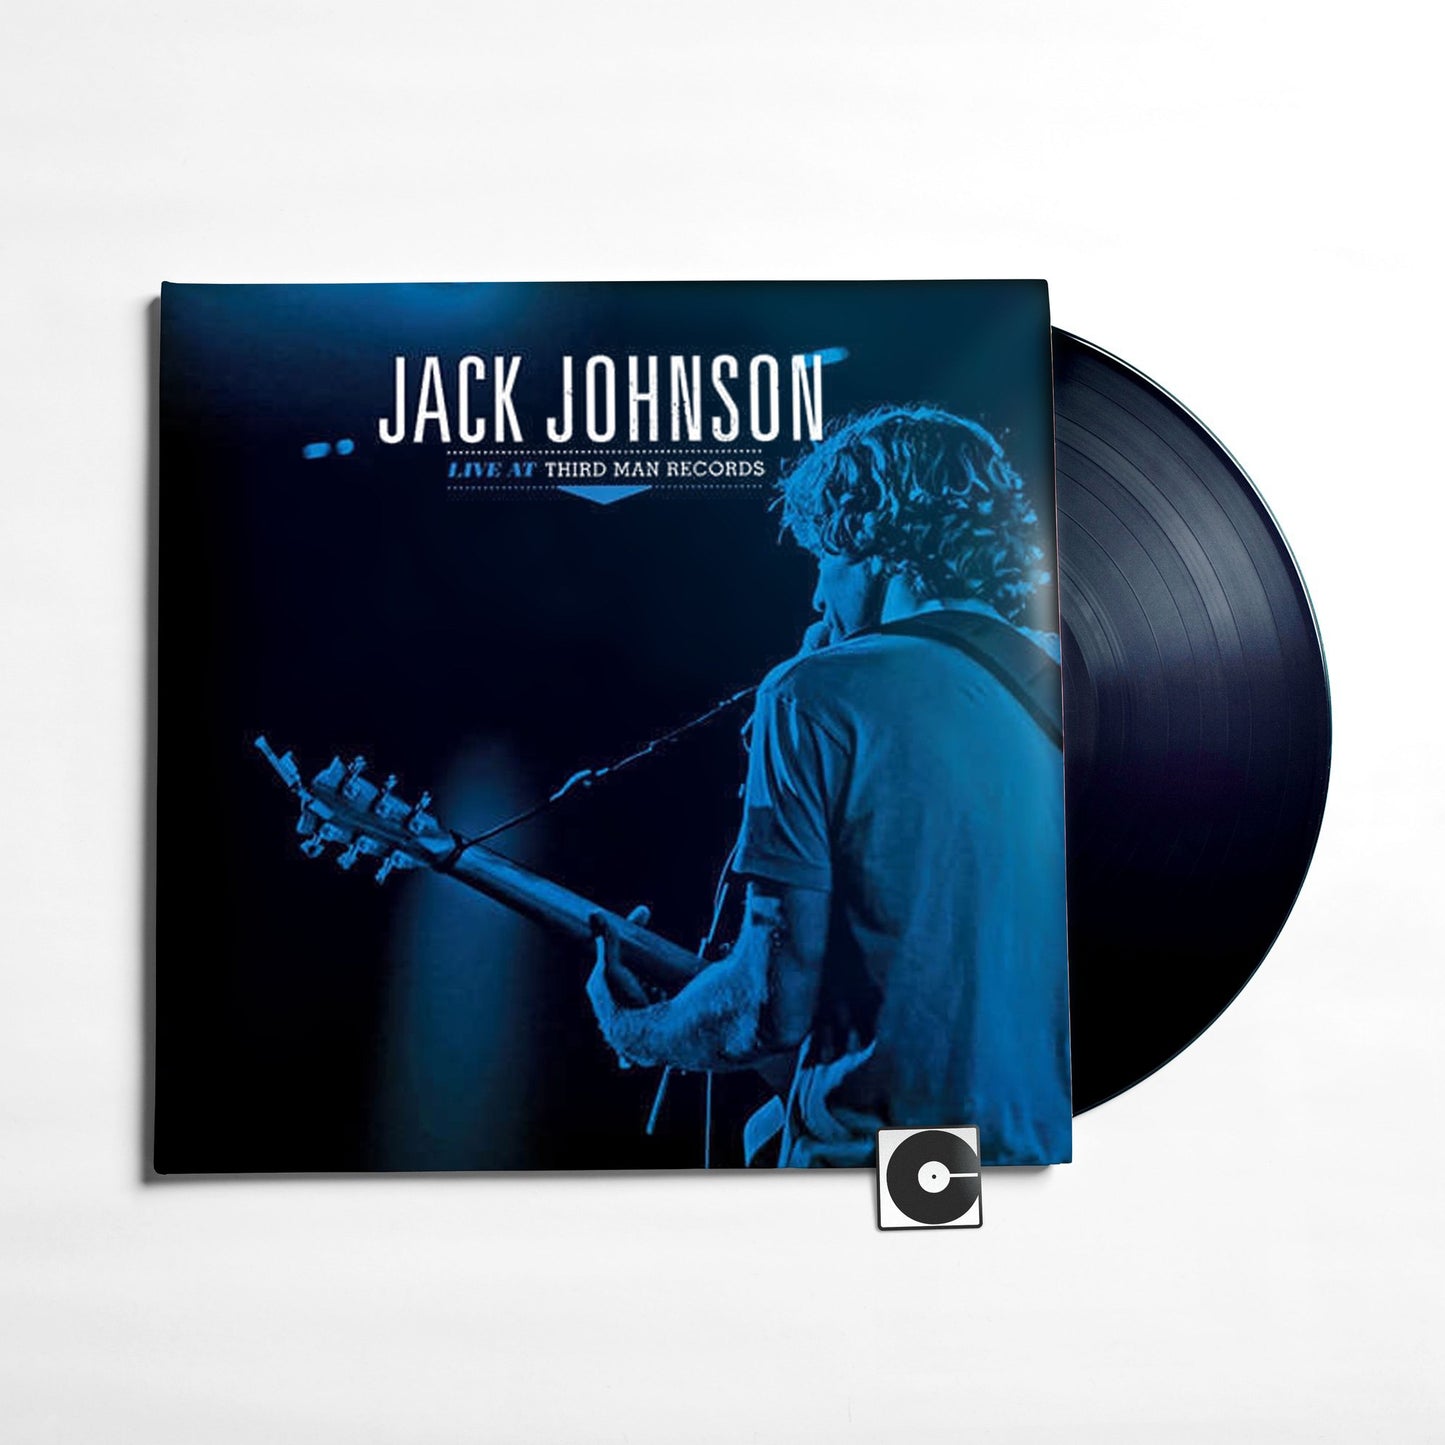 Jack Johnson - "Jack Johnson: Live At Third Man Records"